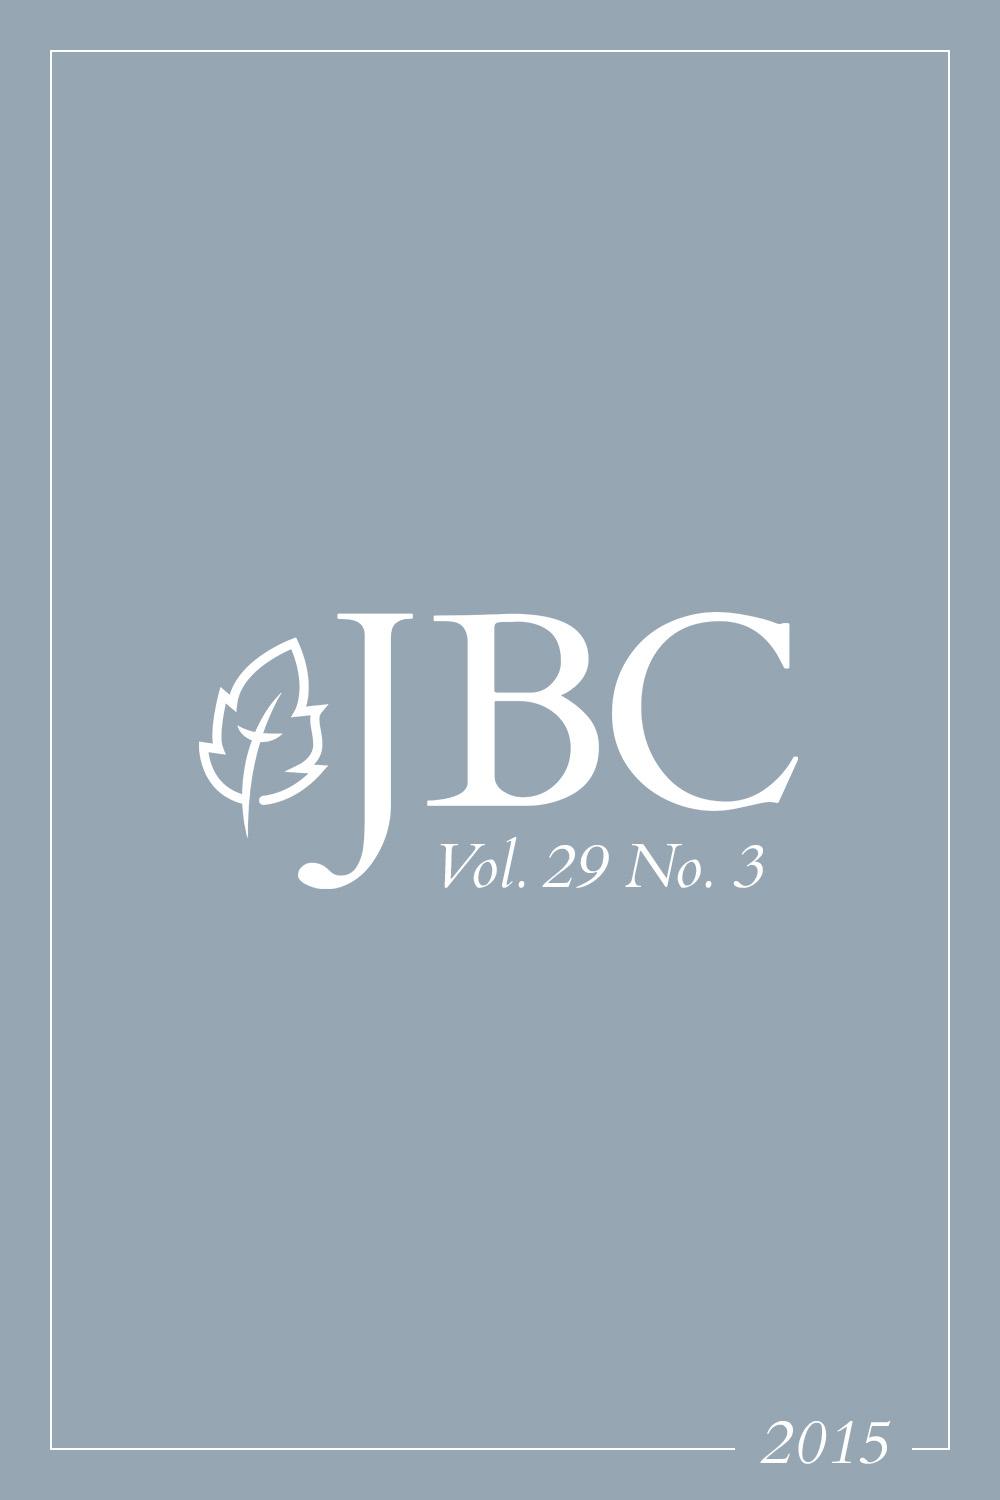 JBC Volume 29:3 (2015) PDF Featured Image